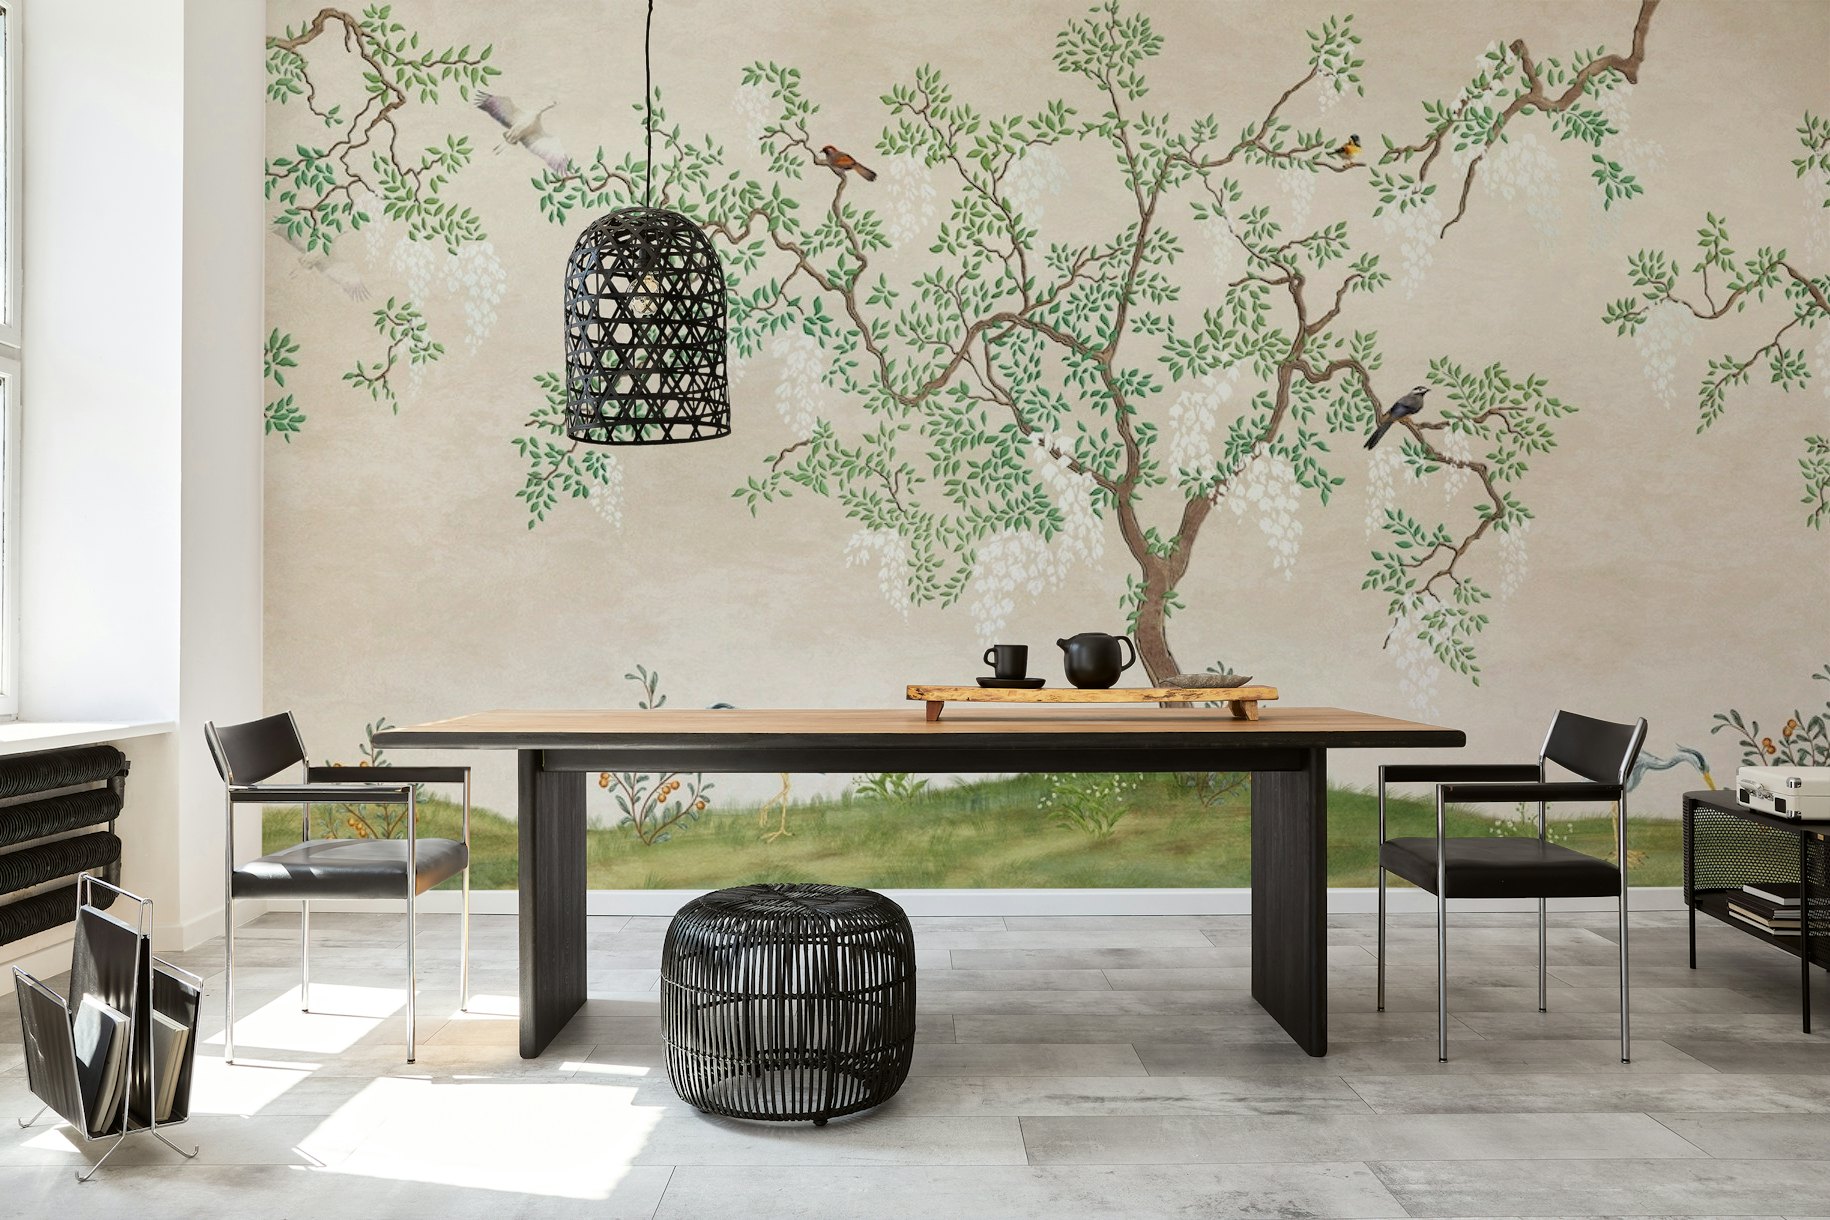 Japanese garden wallpaper